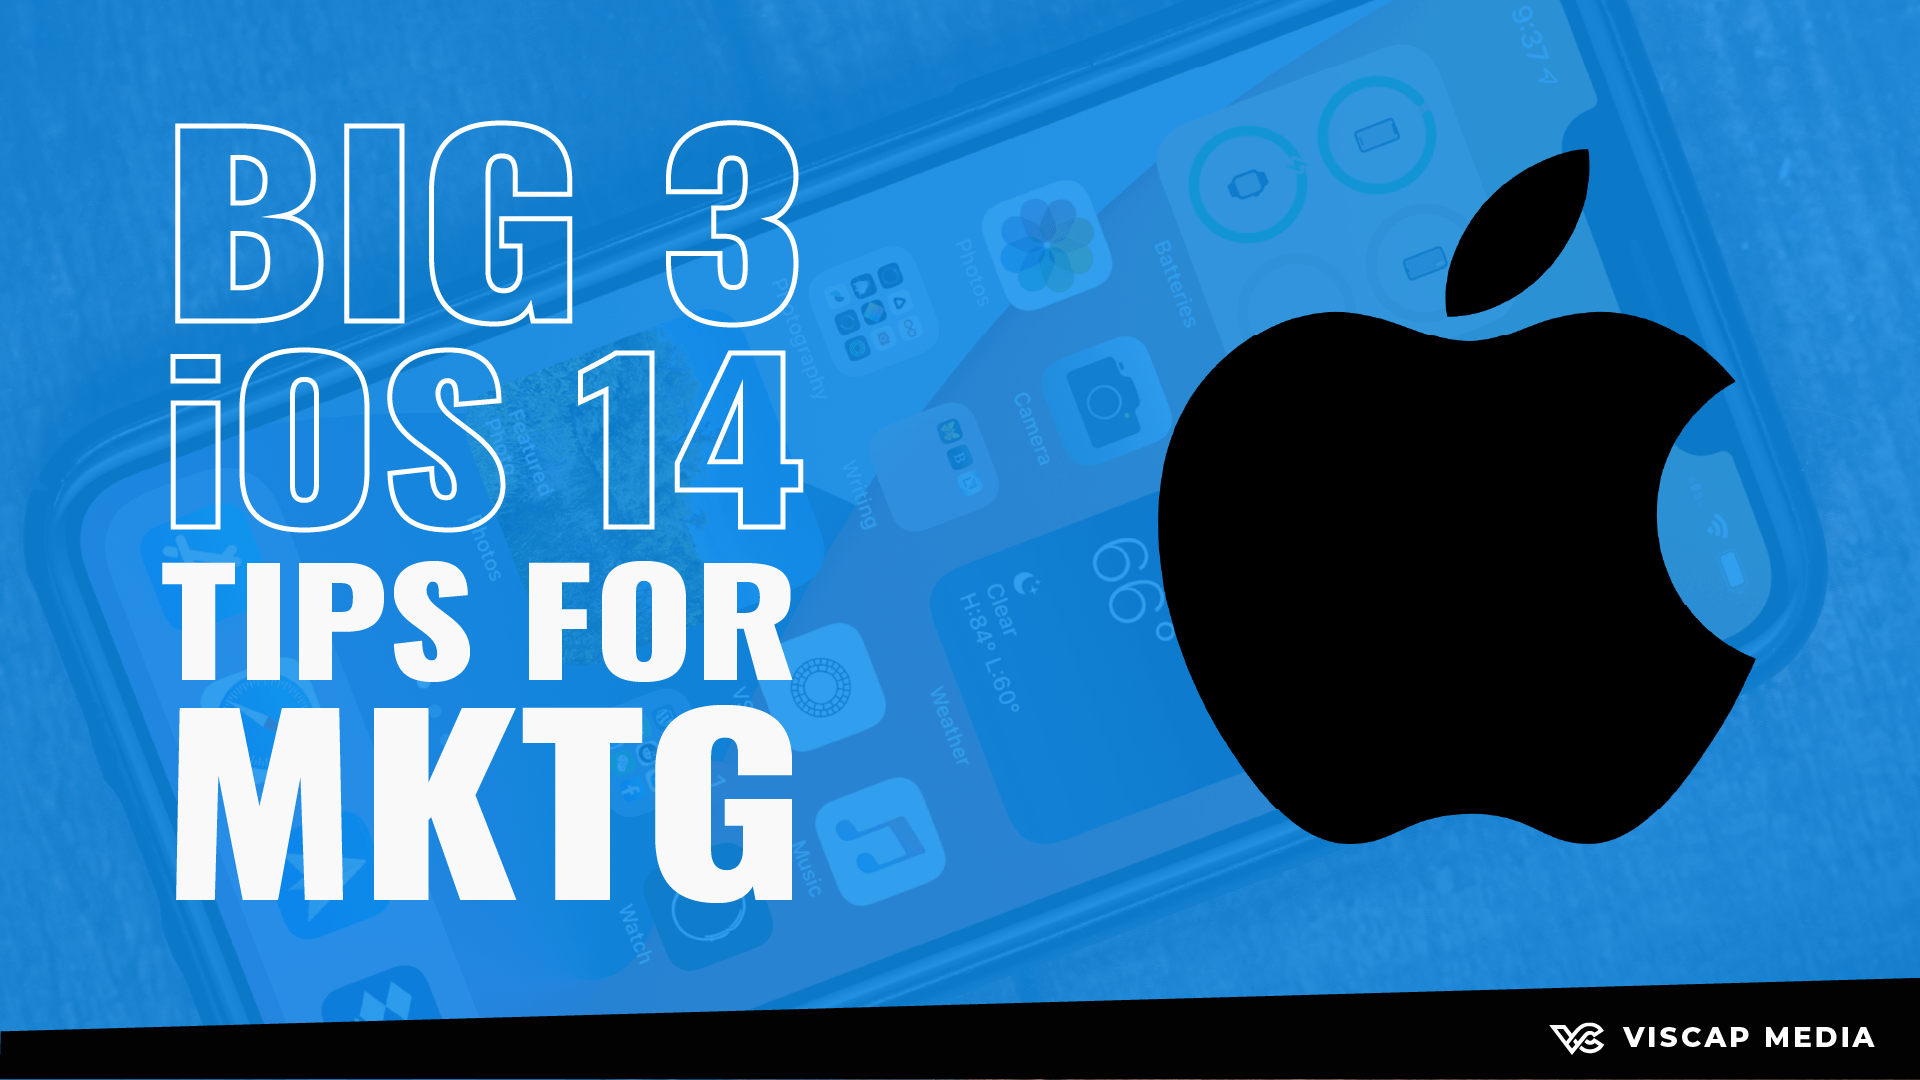 Big 3 iOS Tips For Mktg Thumbnail